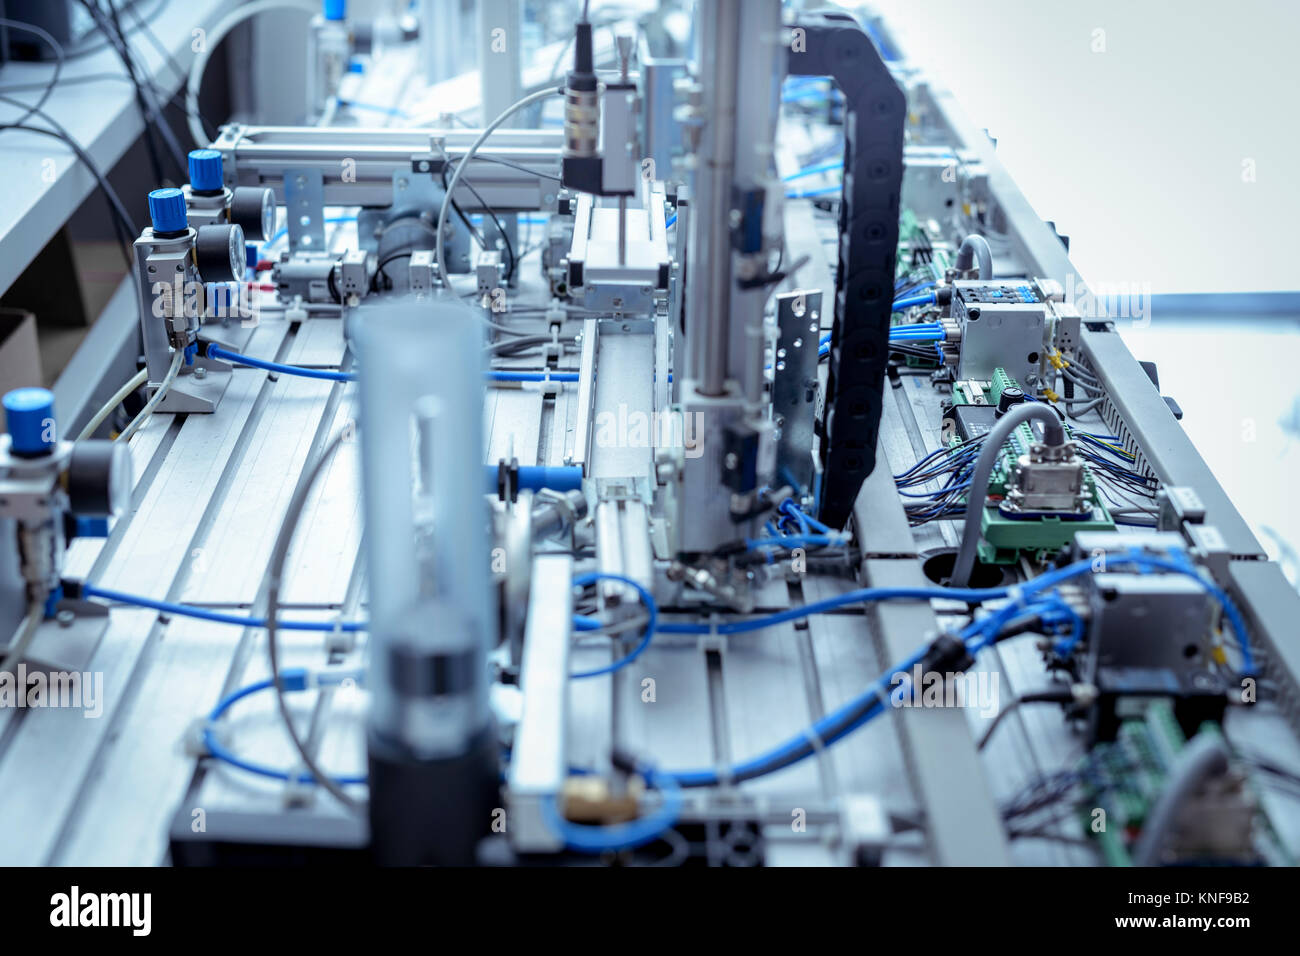 Production line simulation equipment in robotics facility Stock Photo